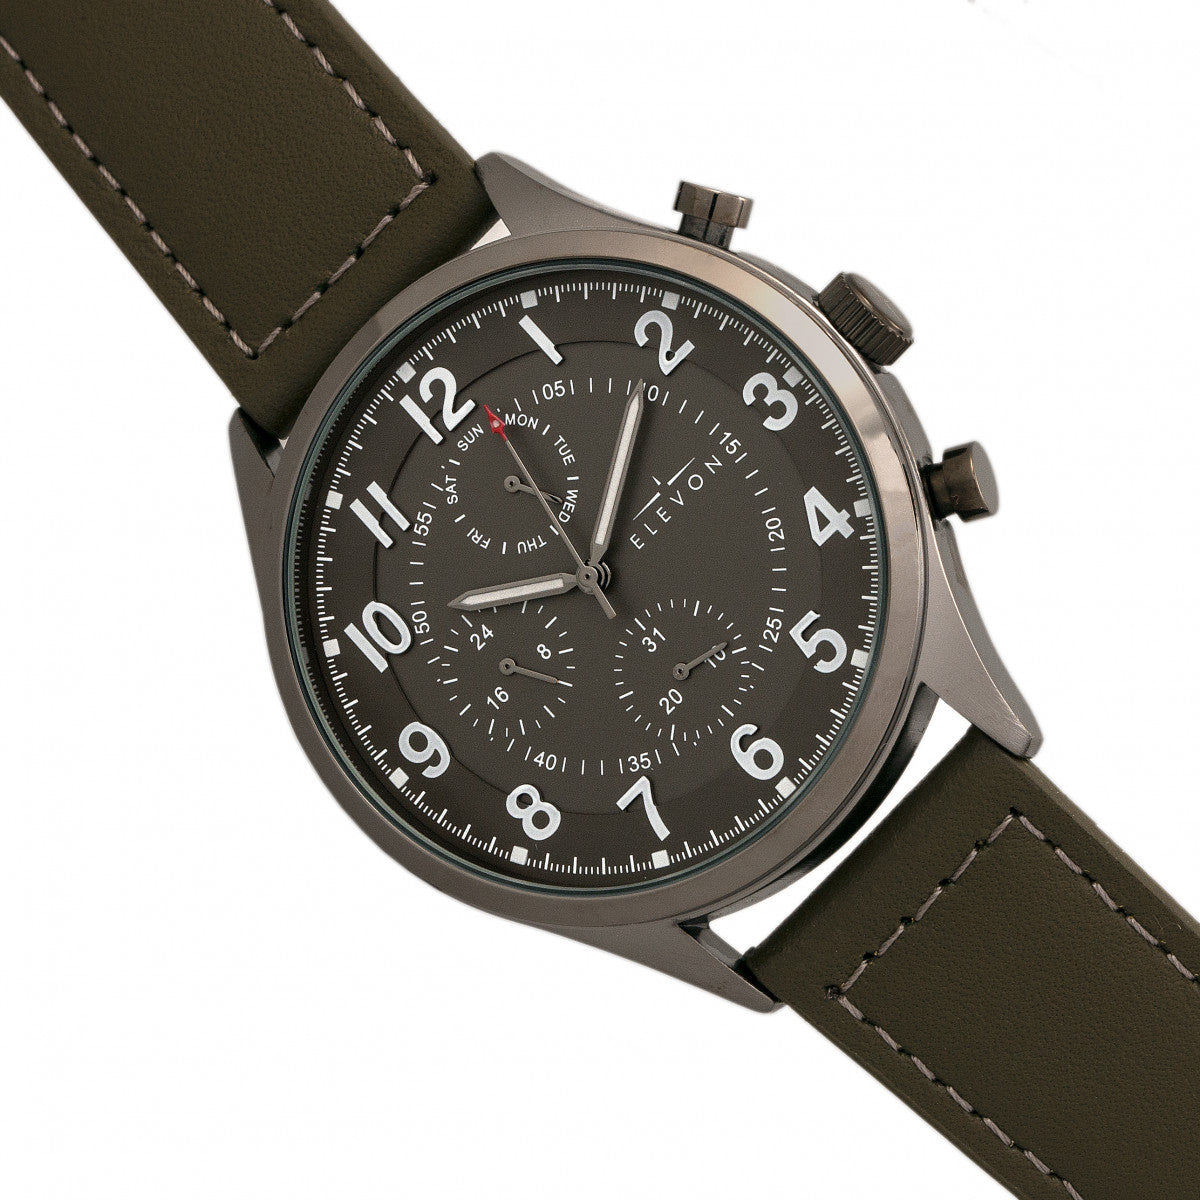 Elevon Lindbergh Leather-Band Watch w/Day/Date -  Olive/Grey - ELE102-6